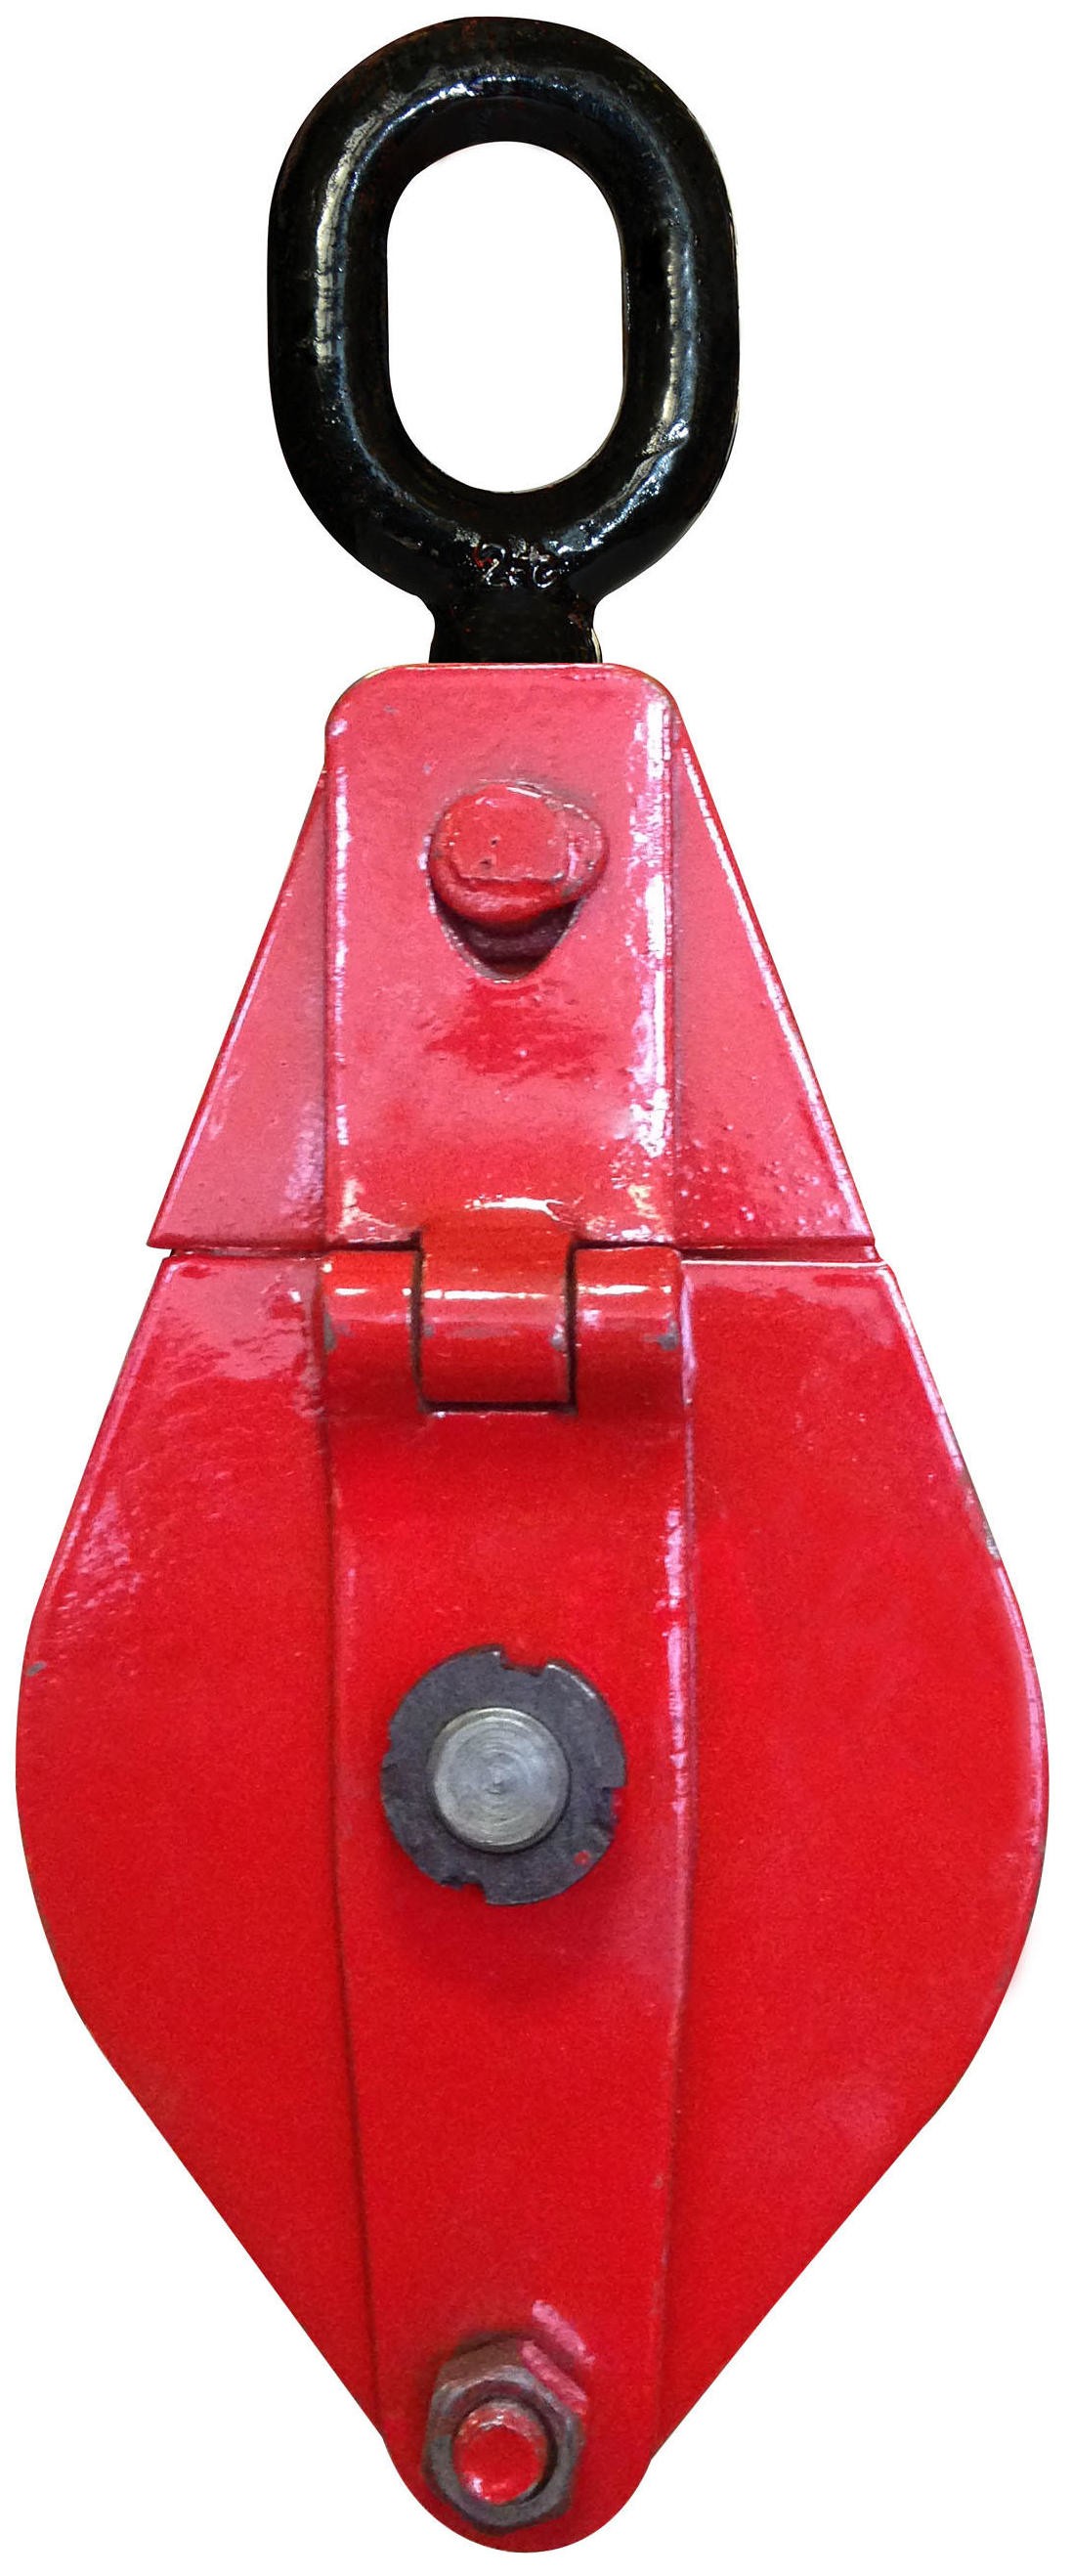 Блок монтажный с ушком под канат 11 мм HQLK 1-1, на подшипнике - фото